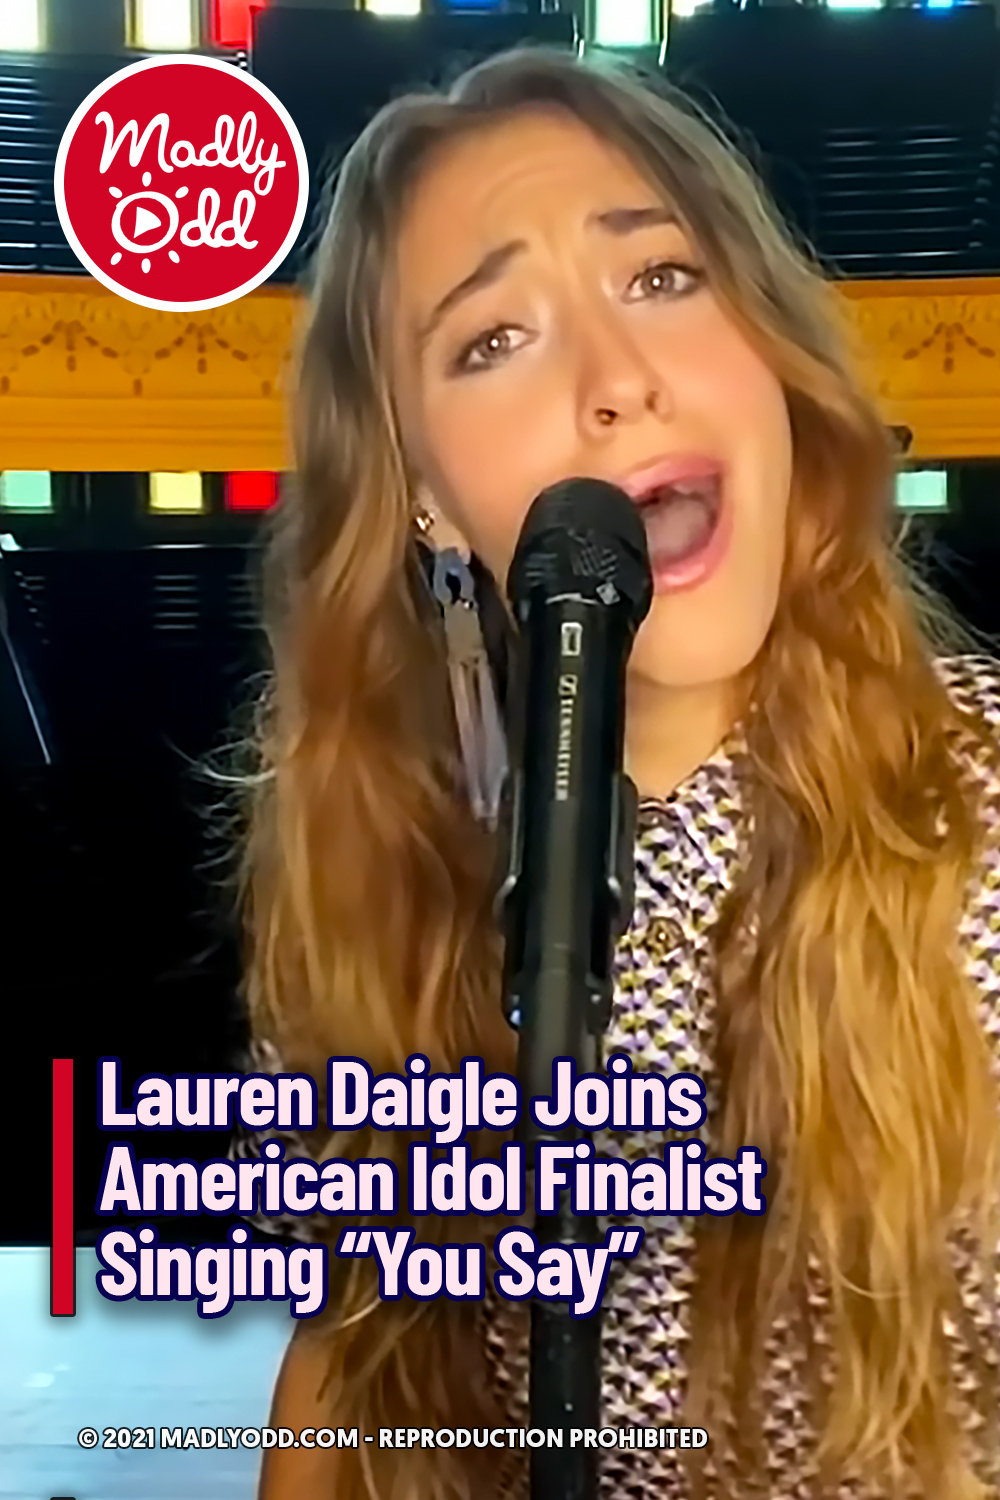 Lauren Daigle Joins American Idol Finalist Singing “You Say”